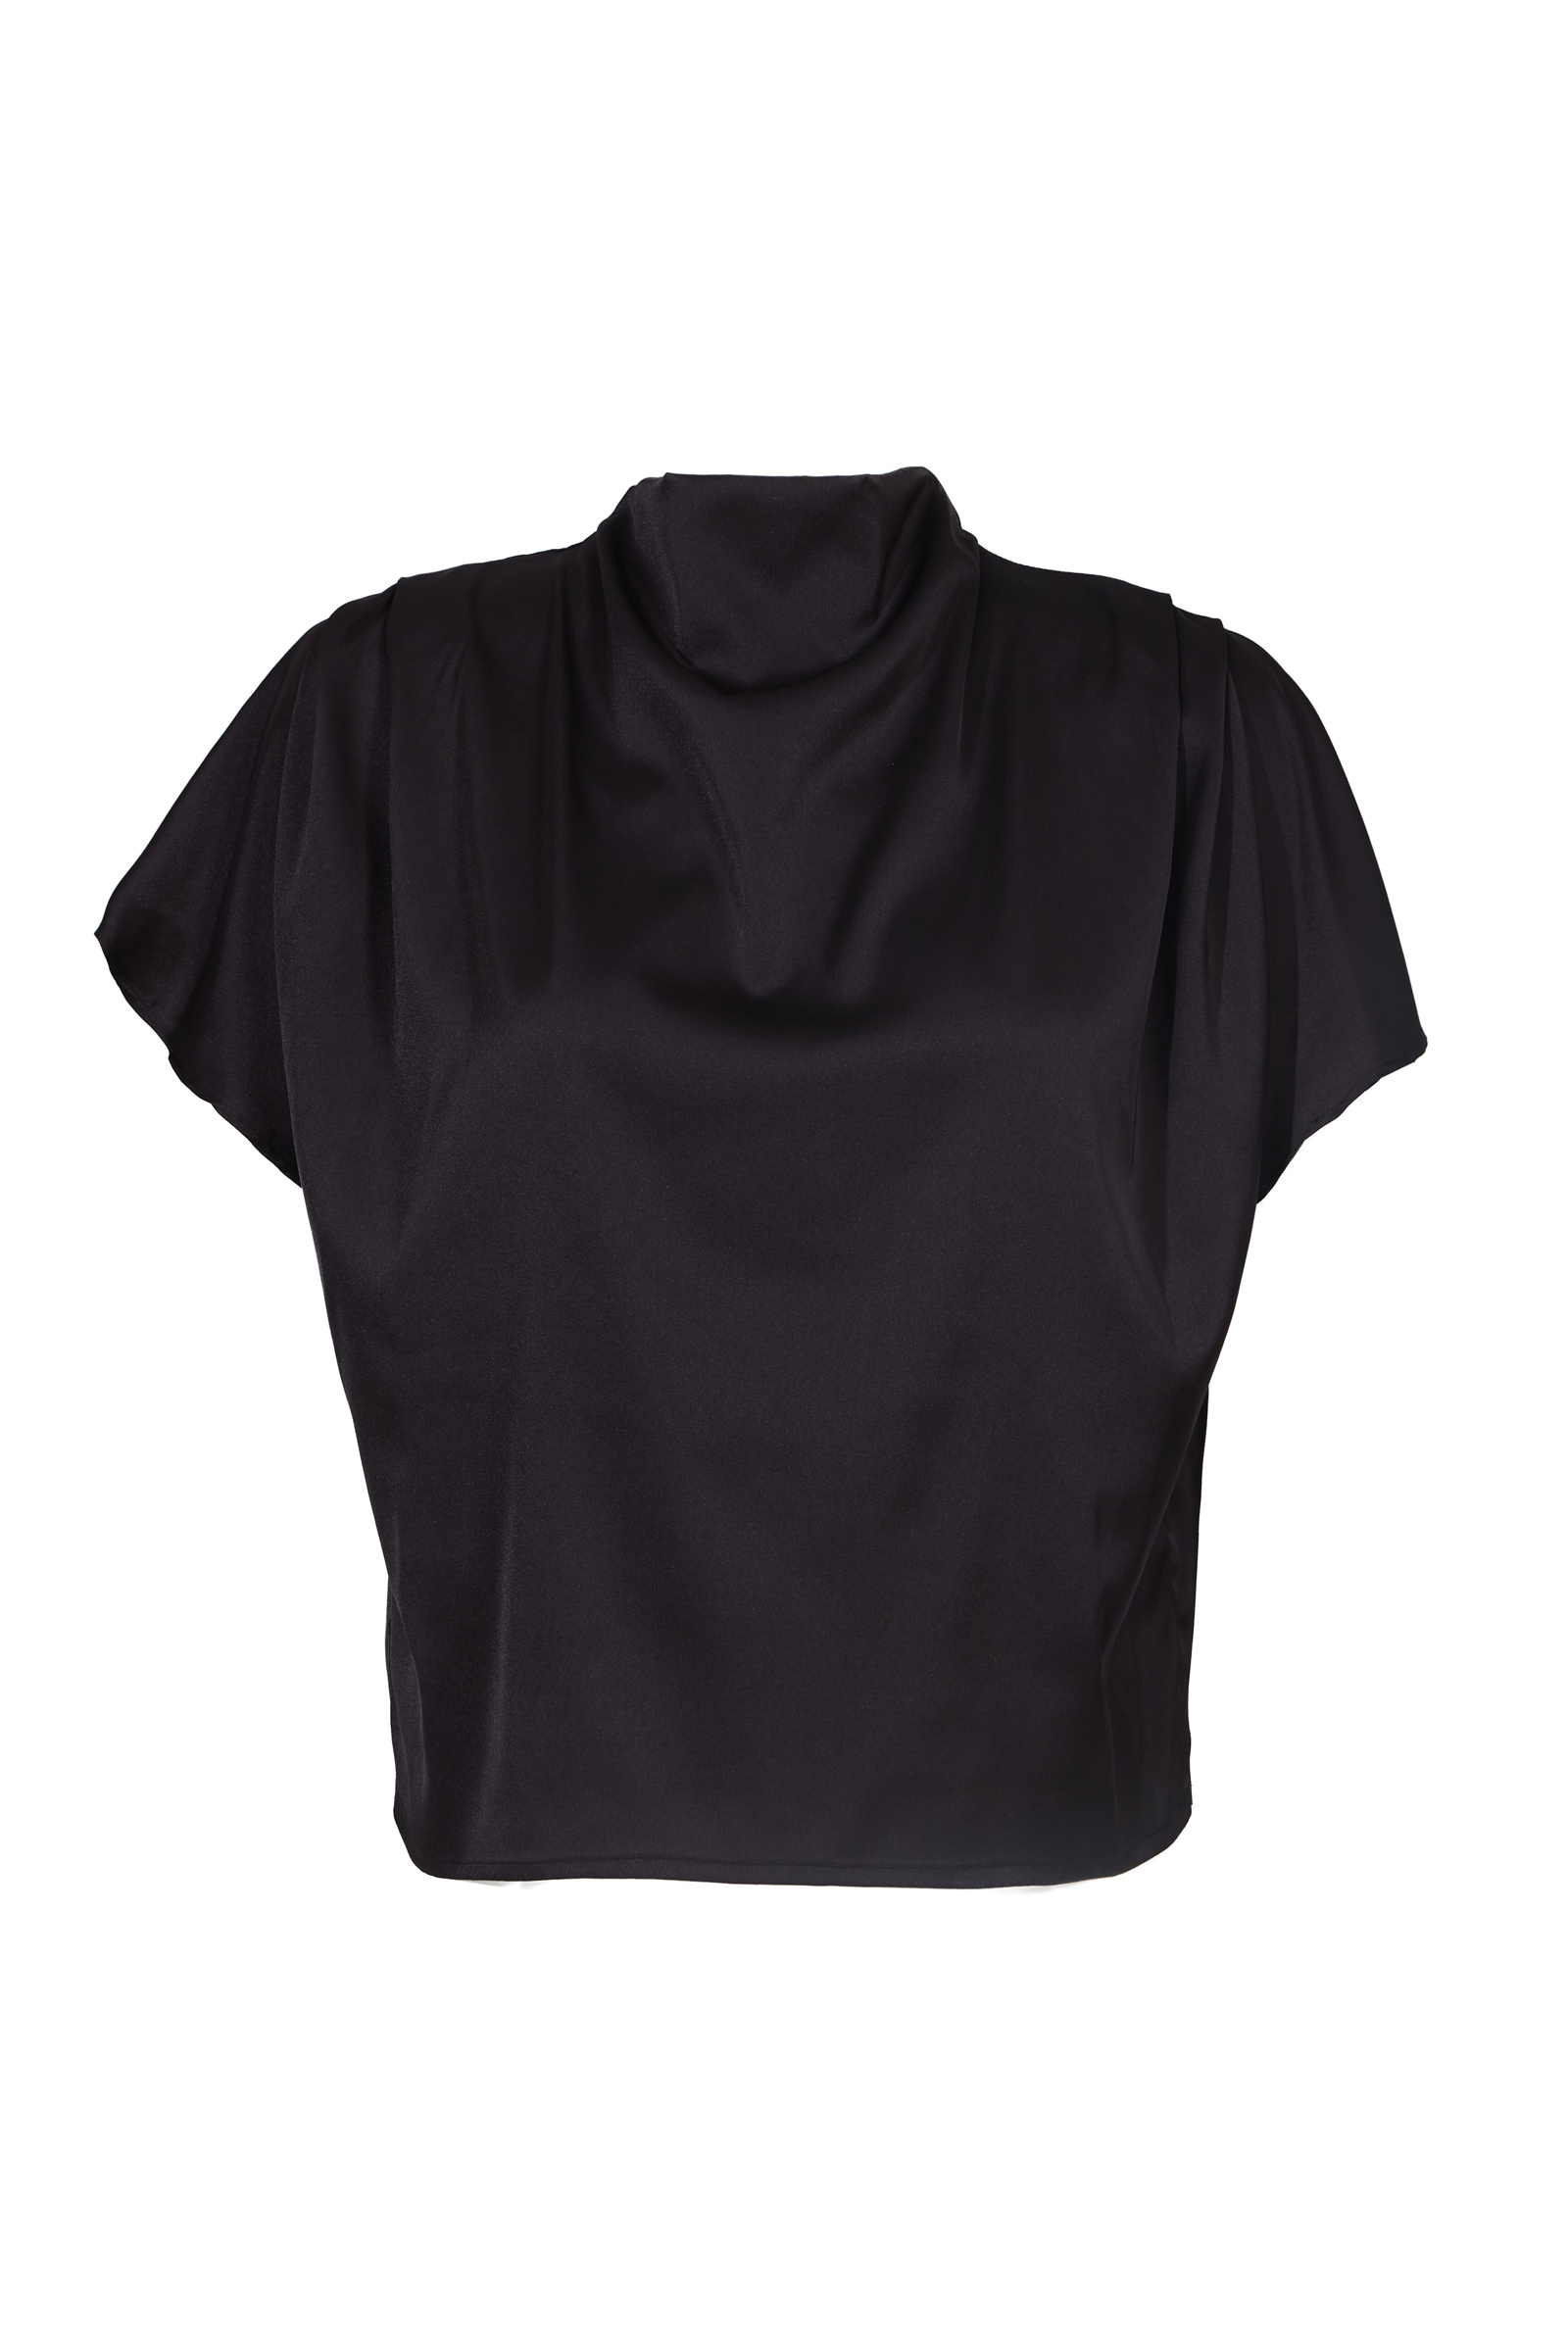 Black Knitted Short Sleeve Shirt